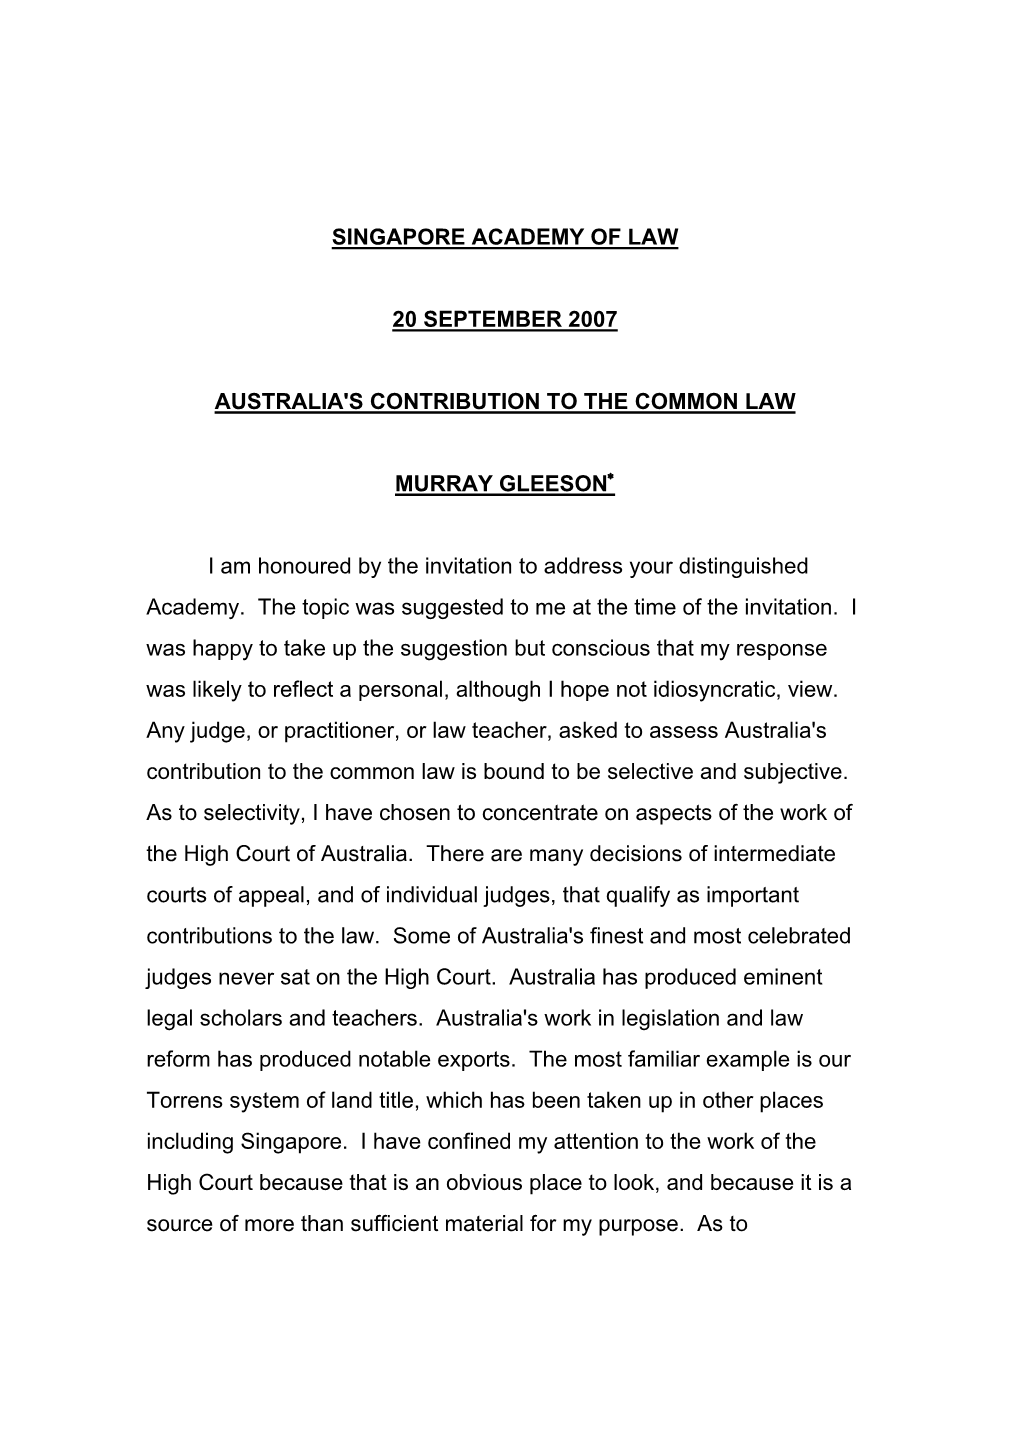 Australia's Contribution to the Common Law